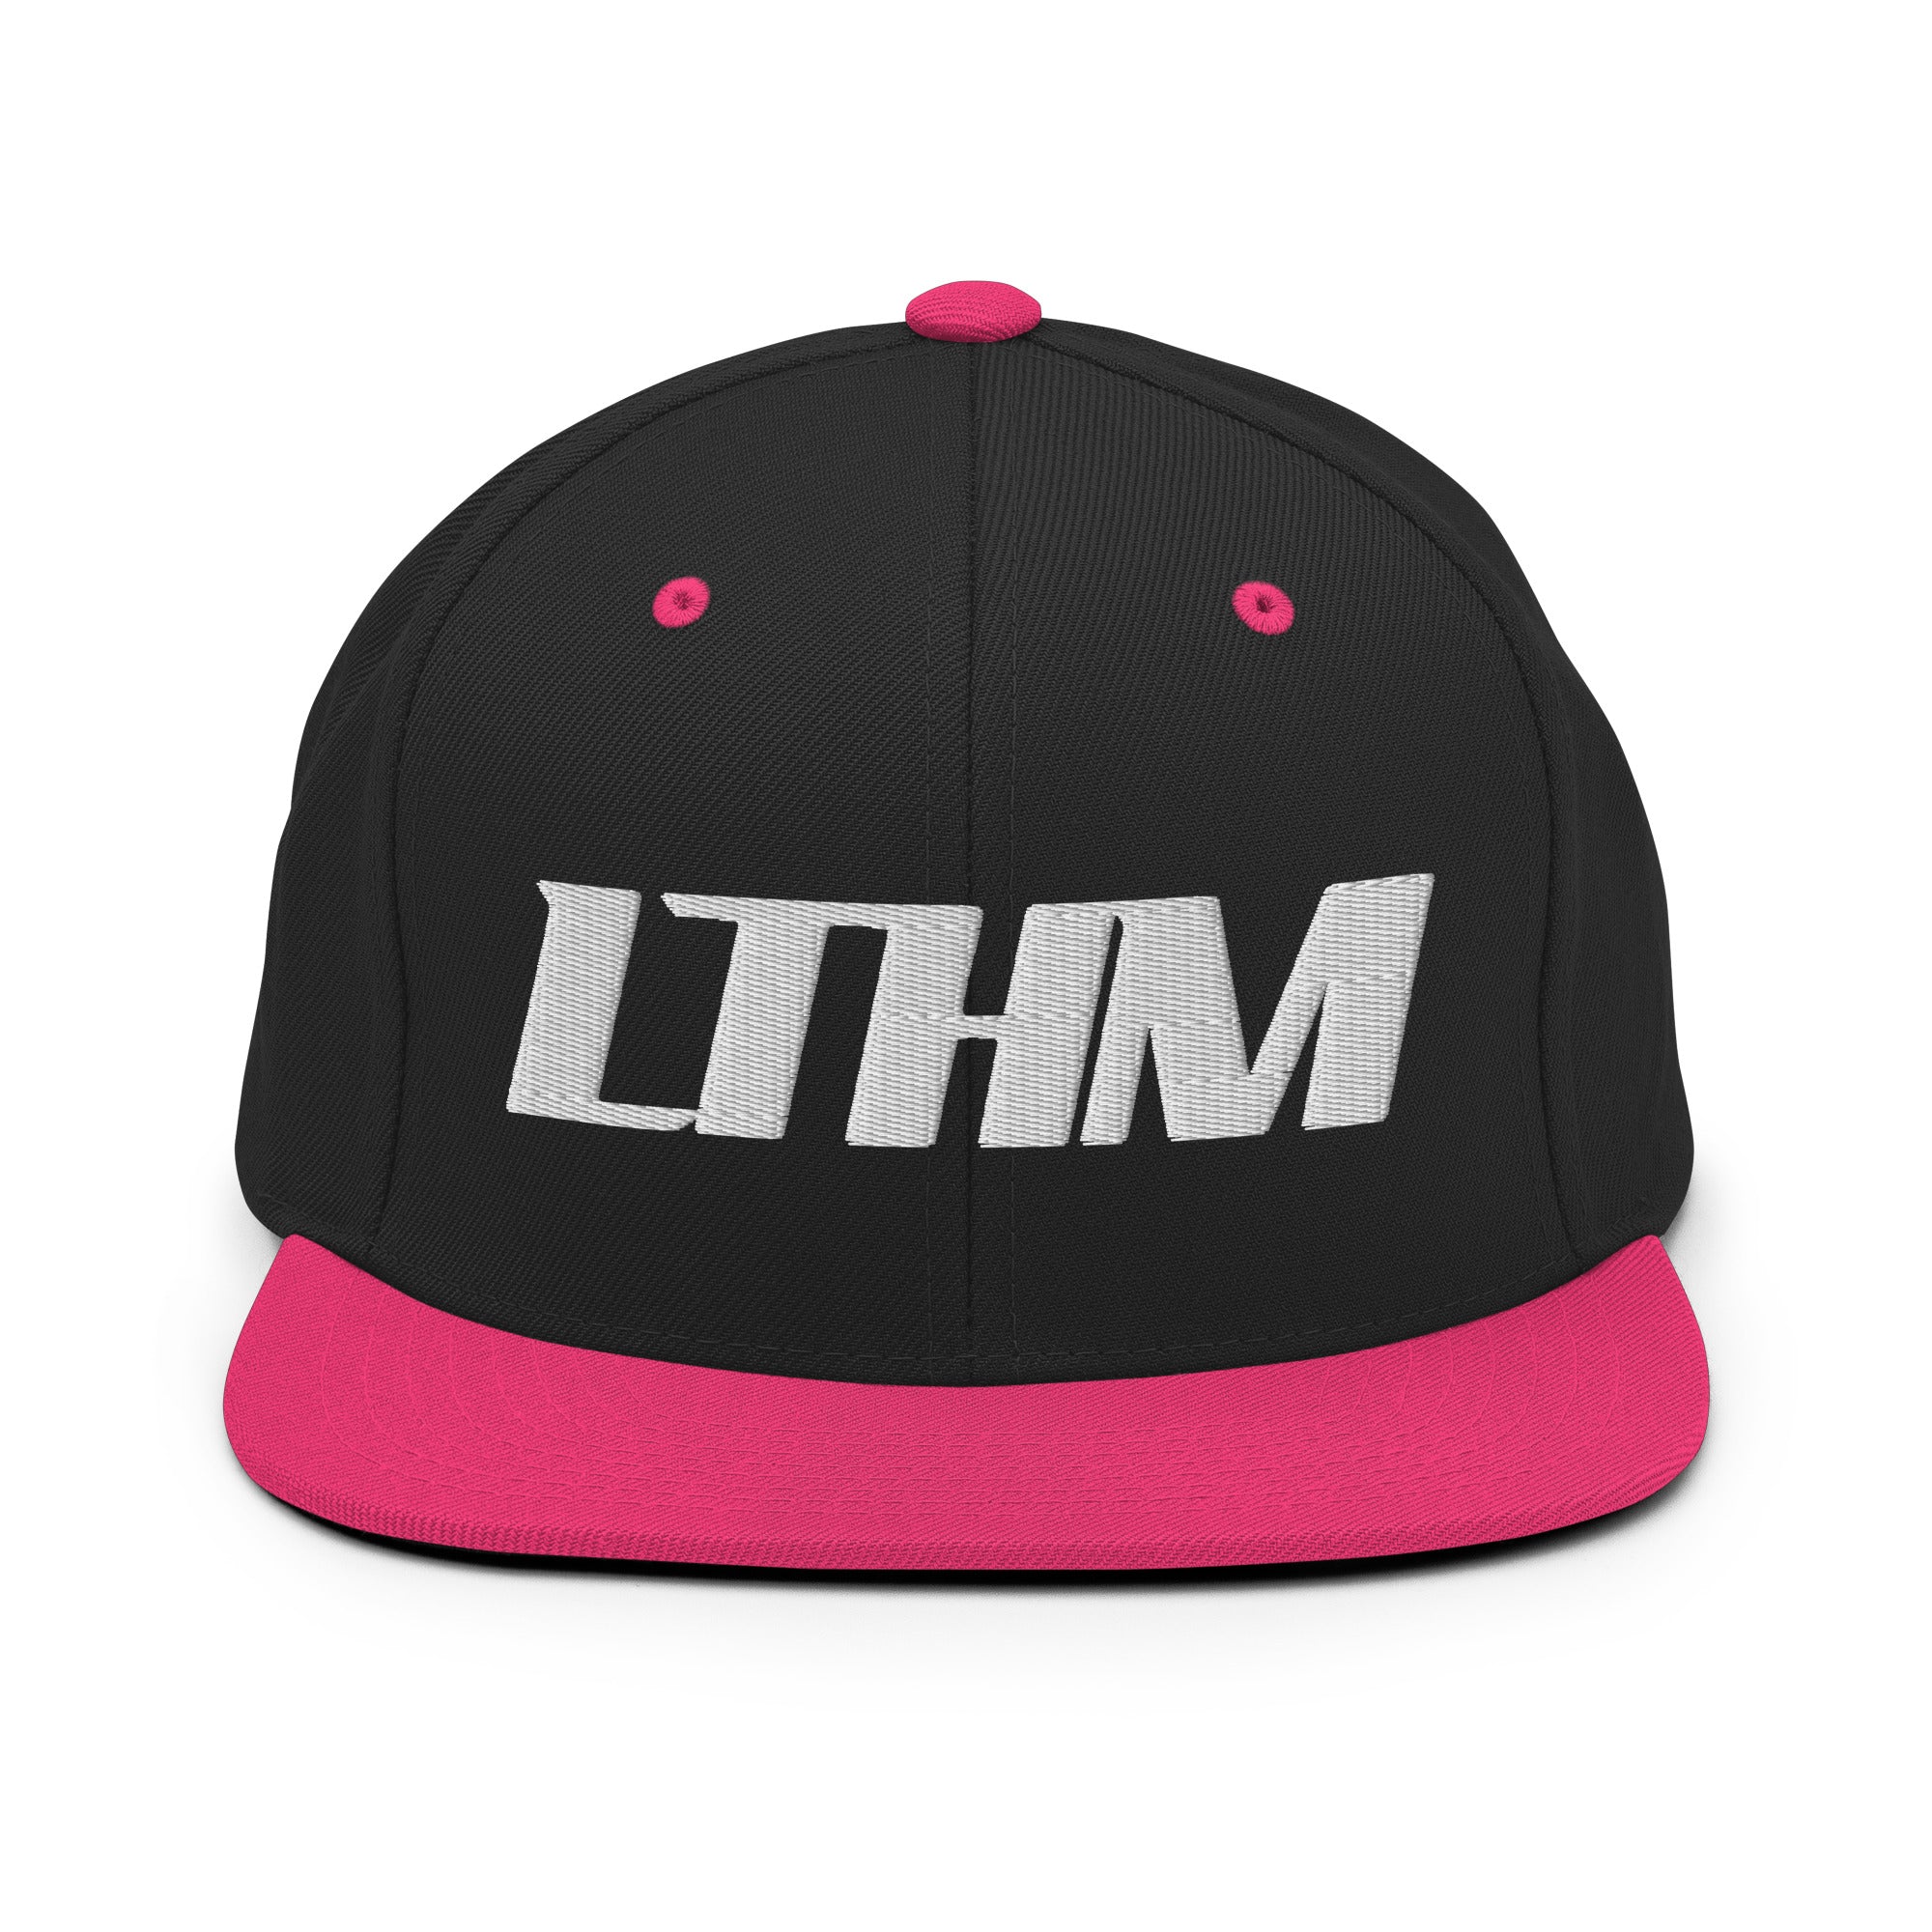 LTHM Snapback - White